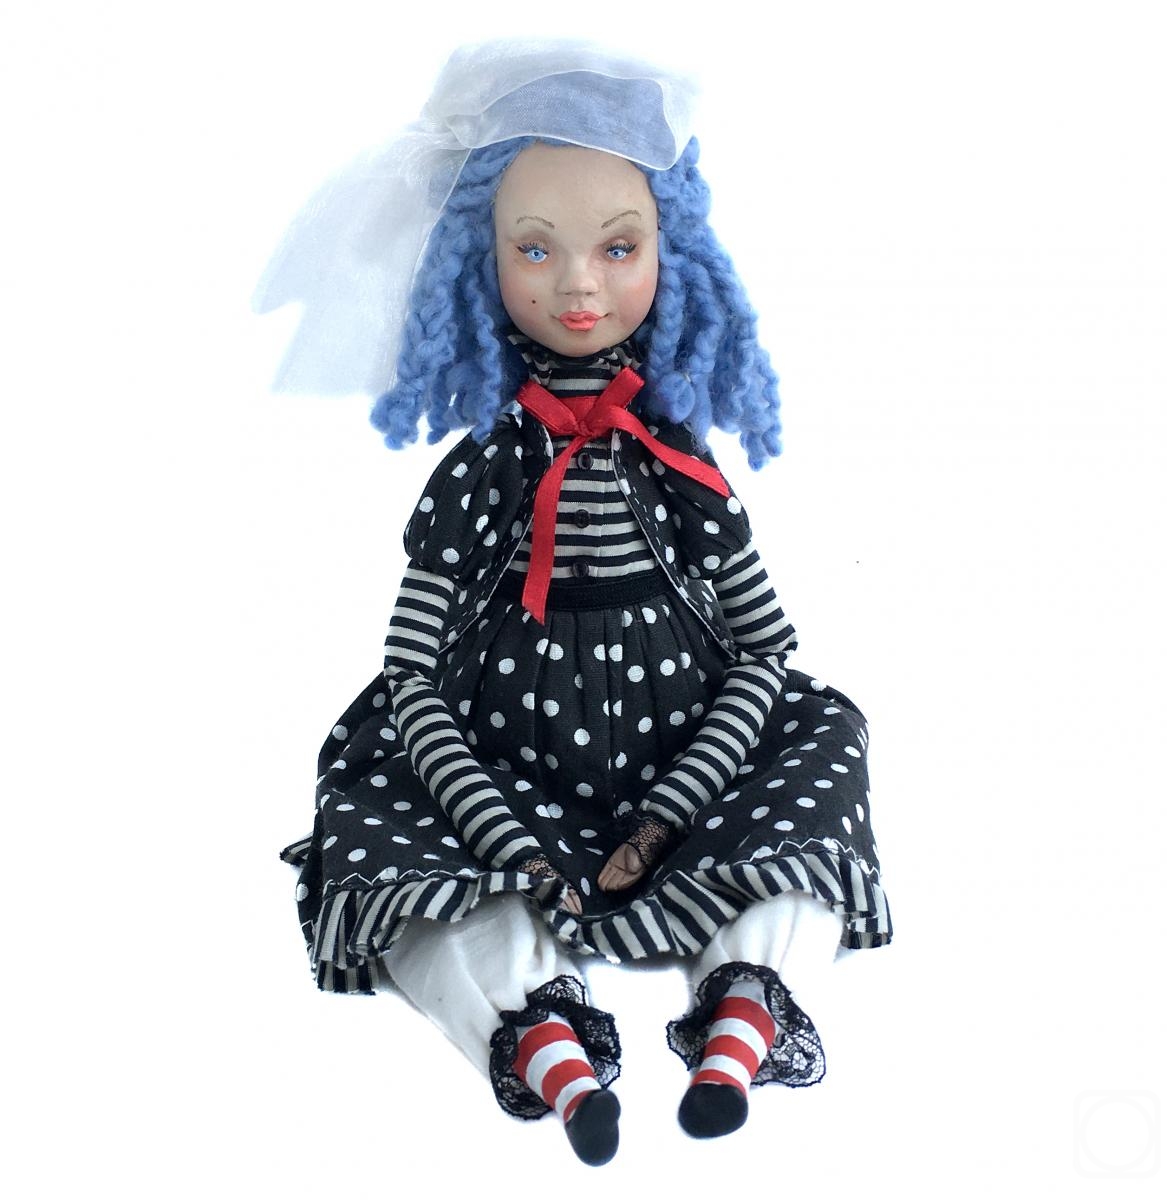 Lupanova Olesya. Boudoir doll